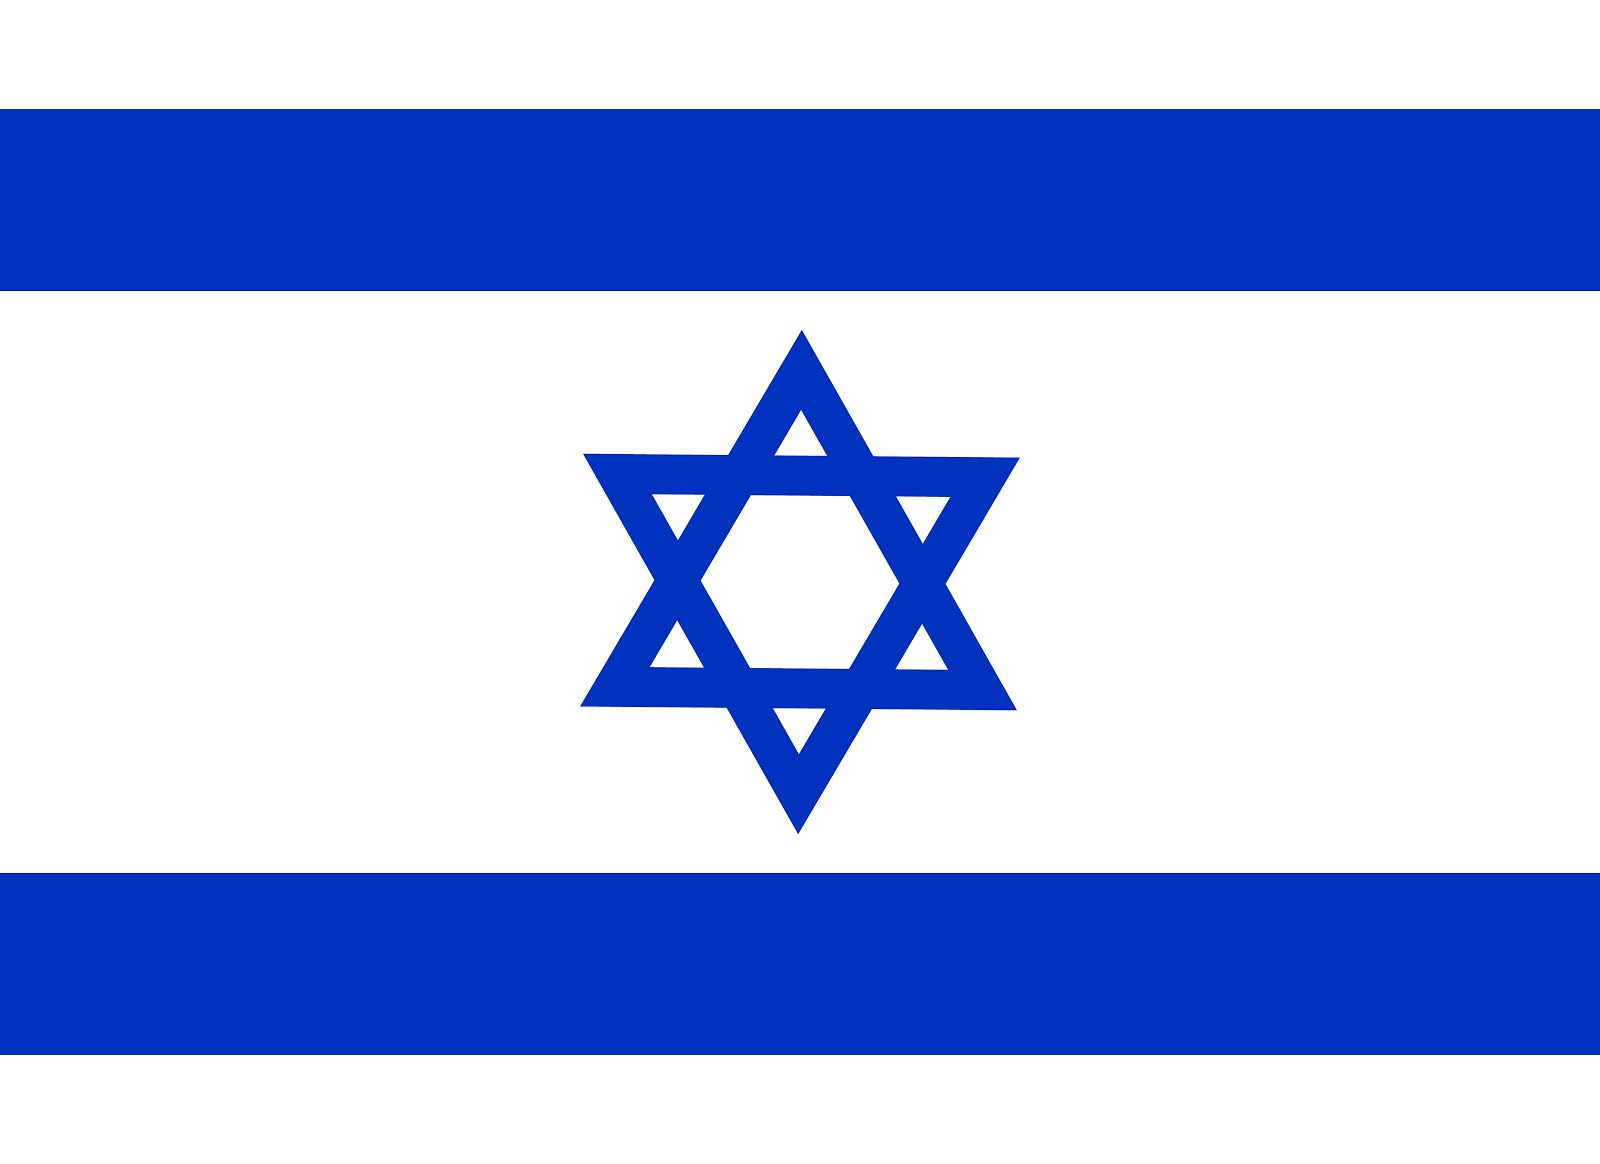 National Flag of Israel